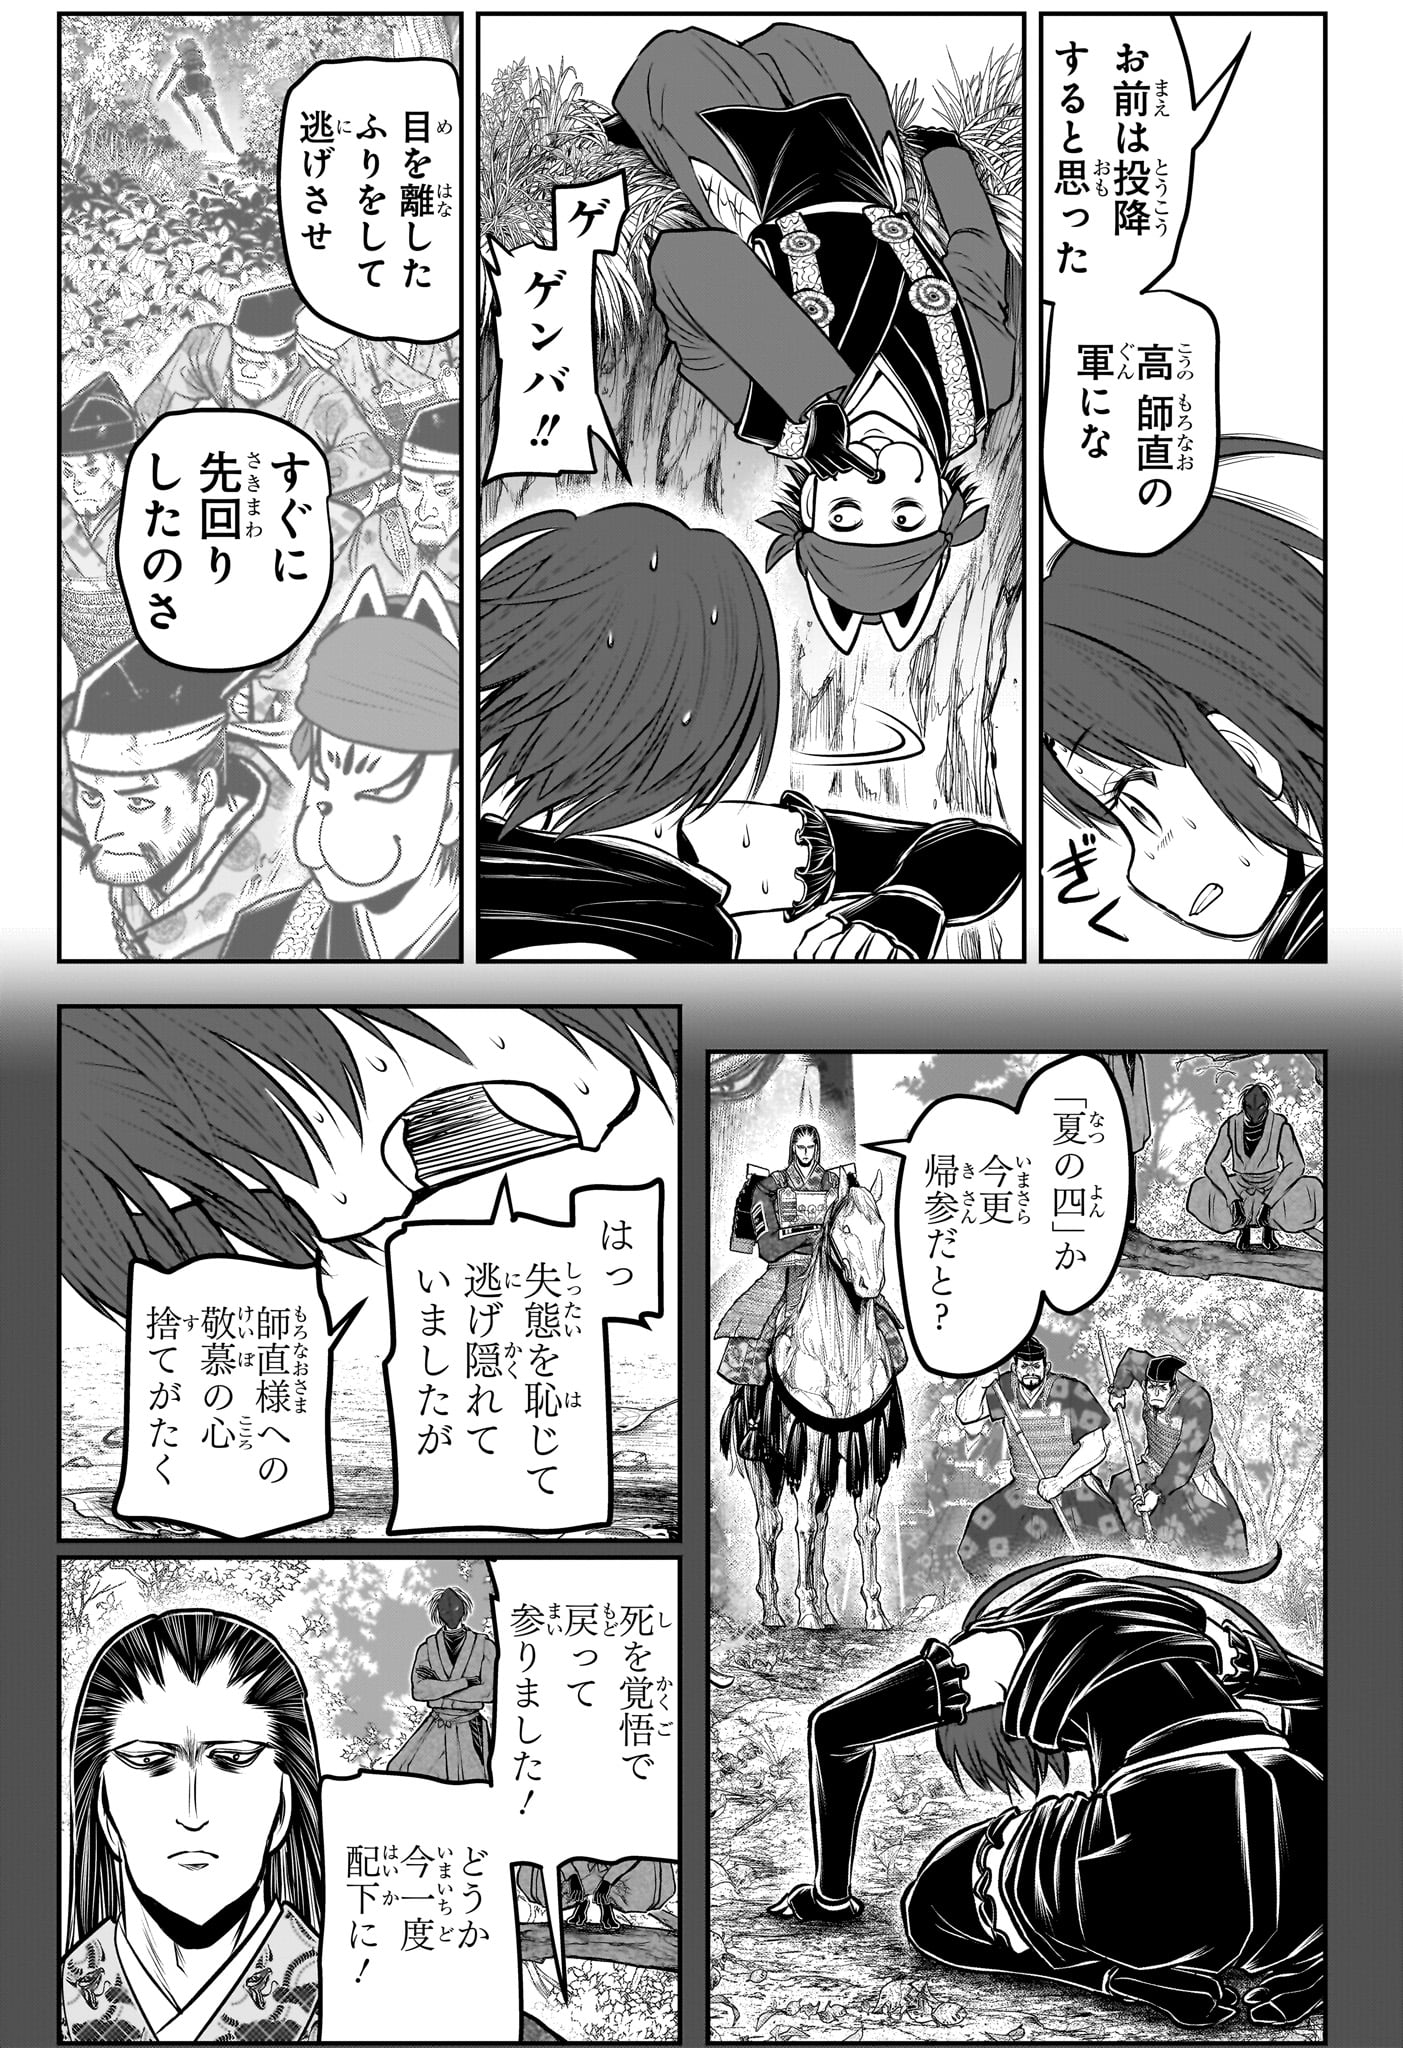 Nige Jouzu no Wakagimi - Chapter 149 - Page 7